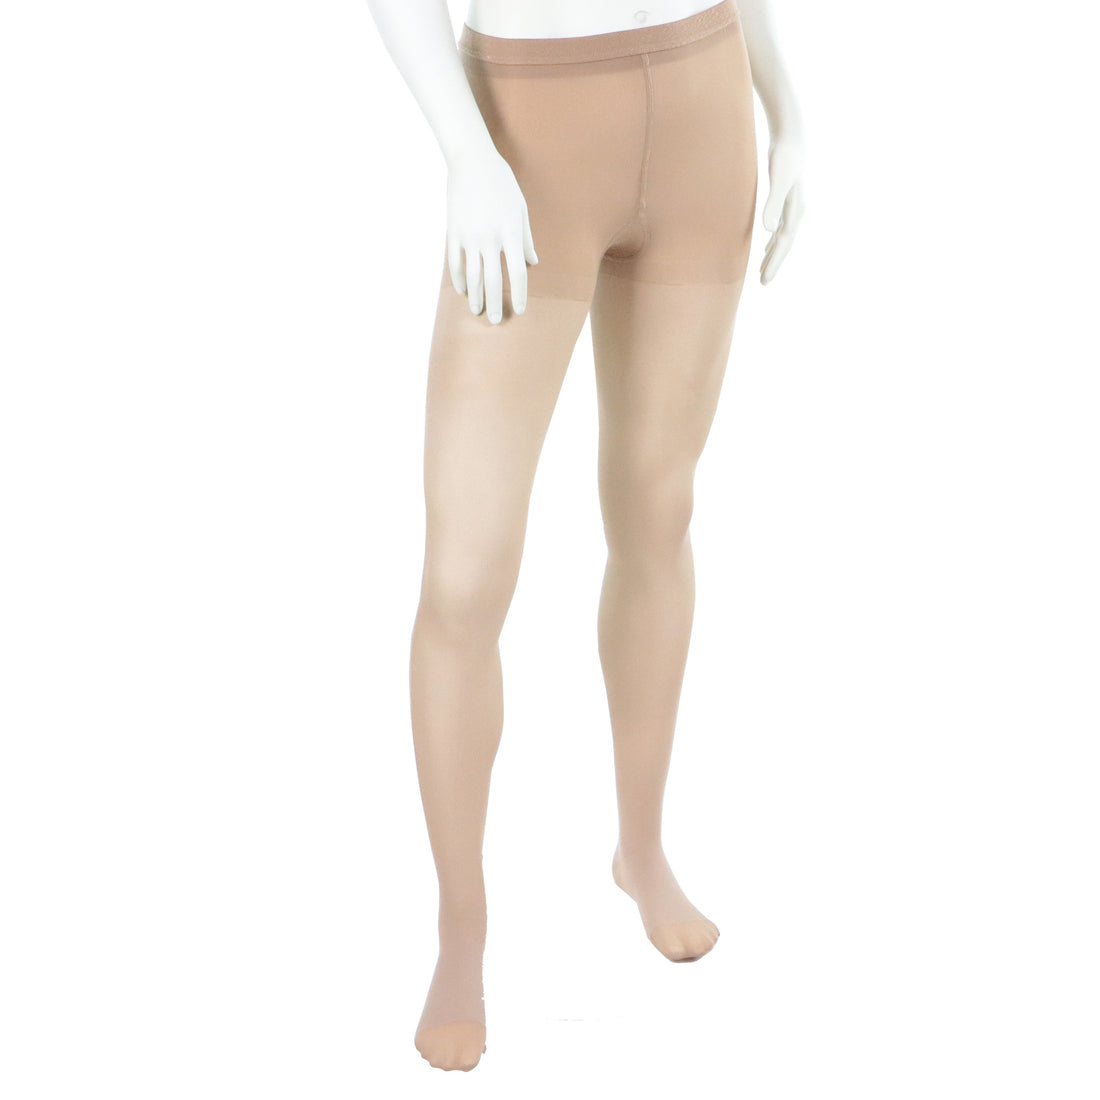 Compression Pantyhose Stockings